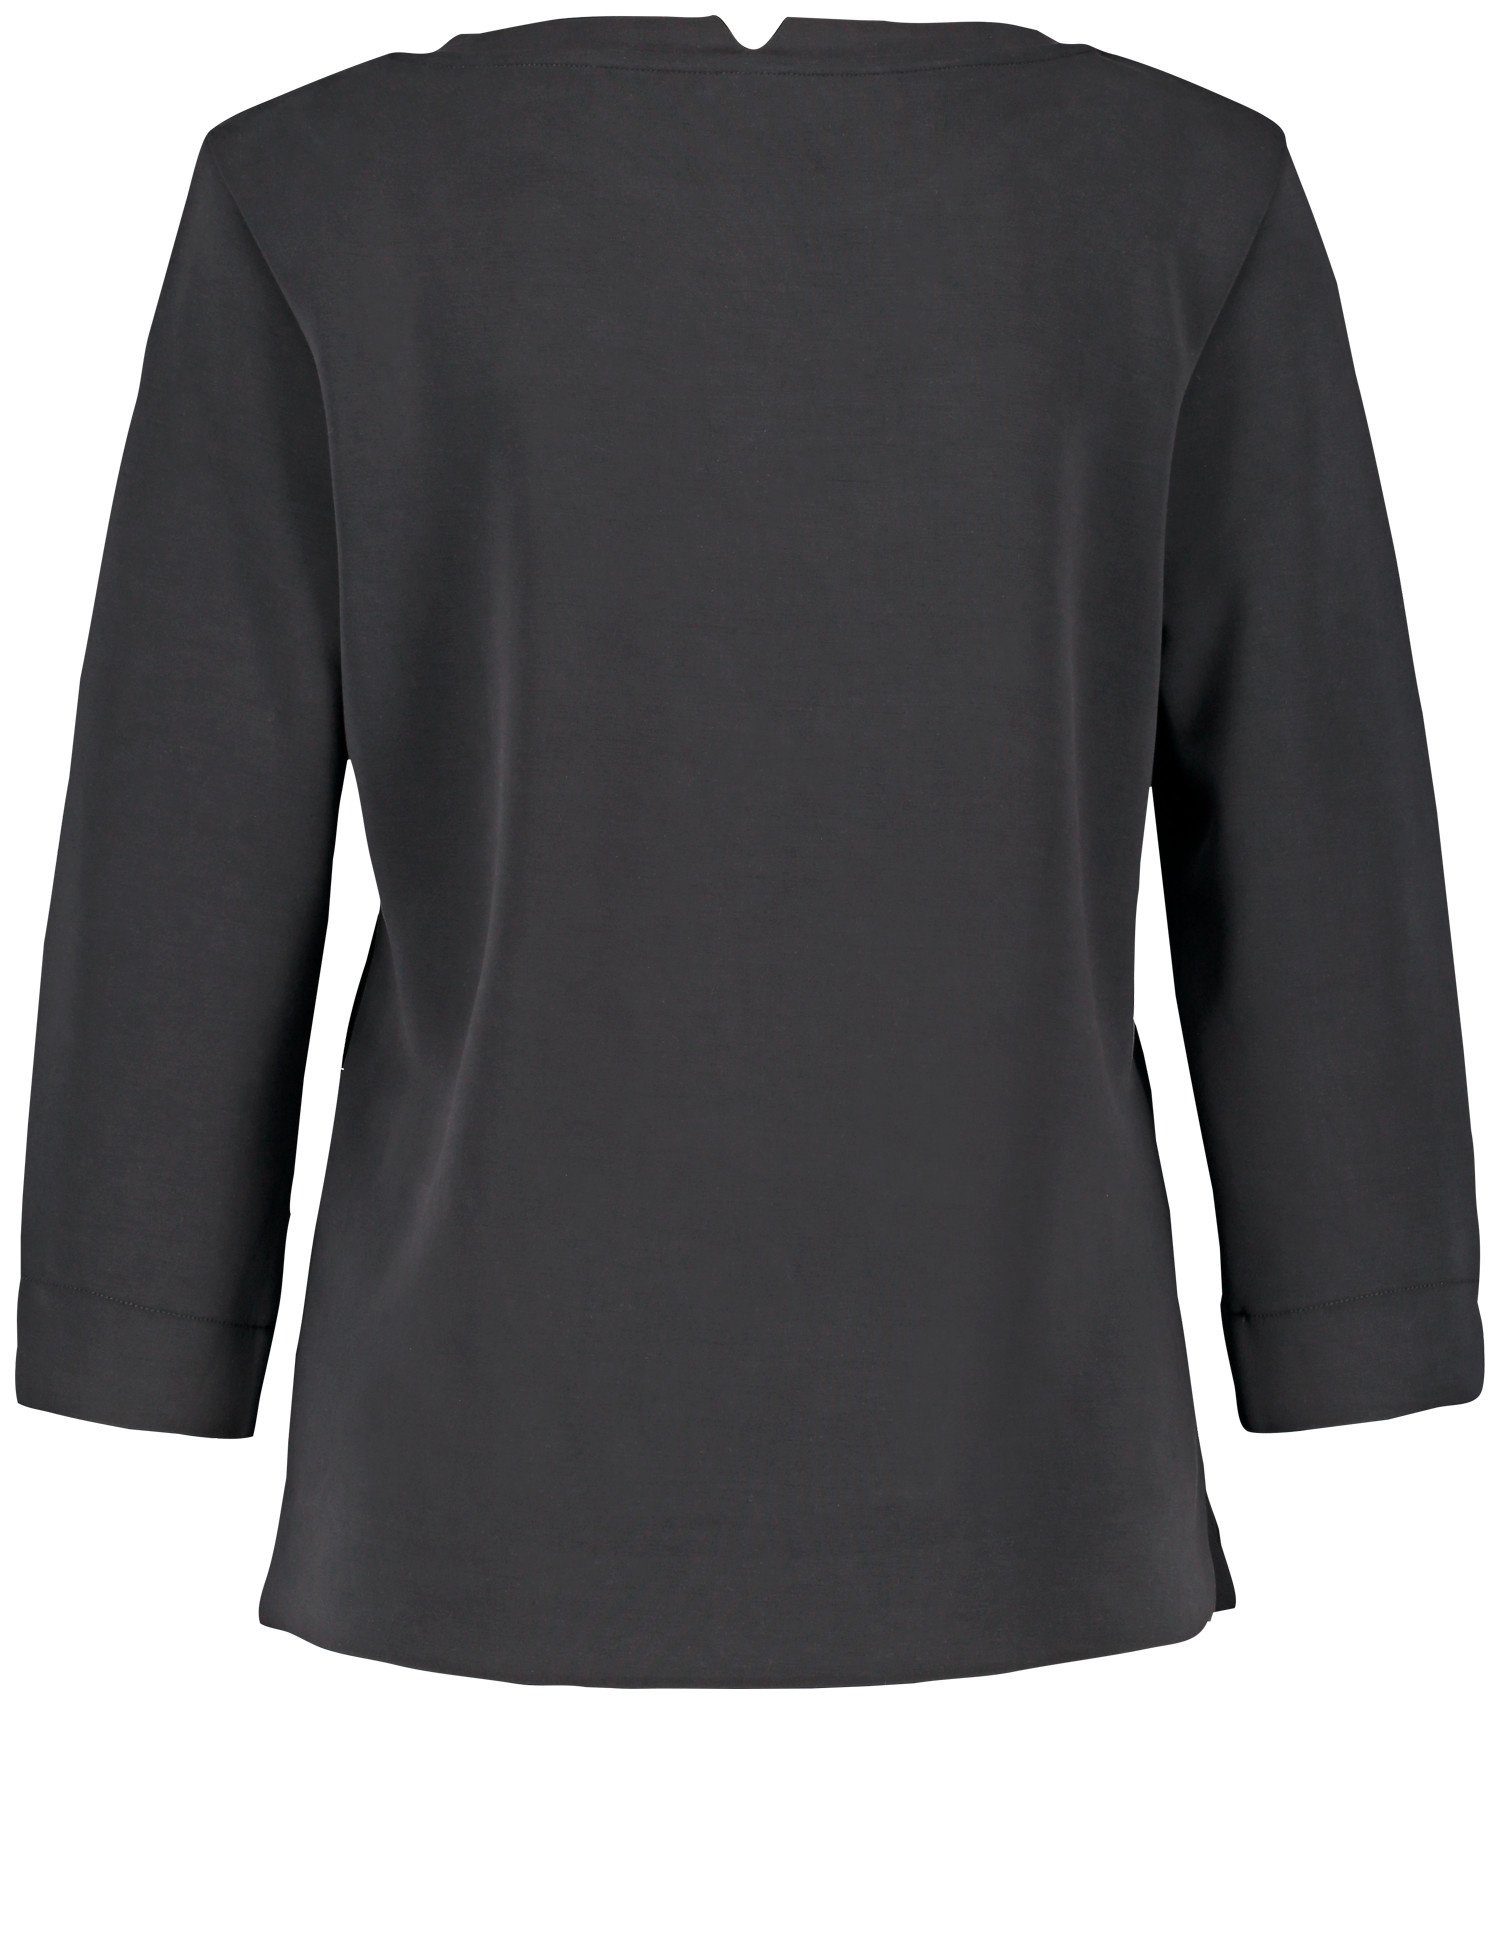 WEBER Jersey aus sandwashed Schwarz 3/4 Arm Shirt GERRY 3/4-Arm-Shirt